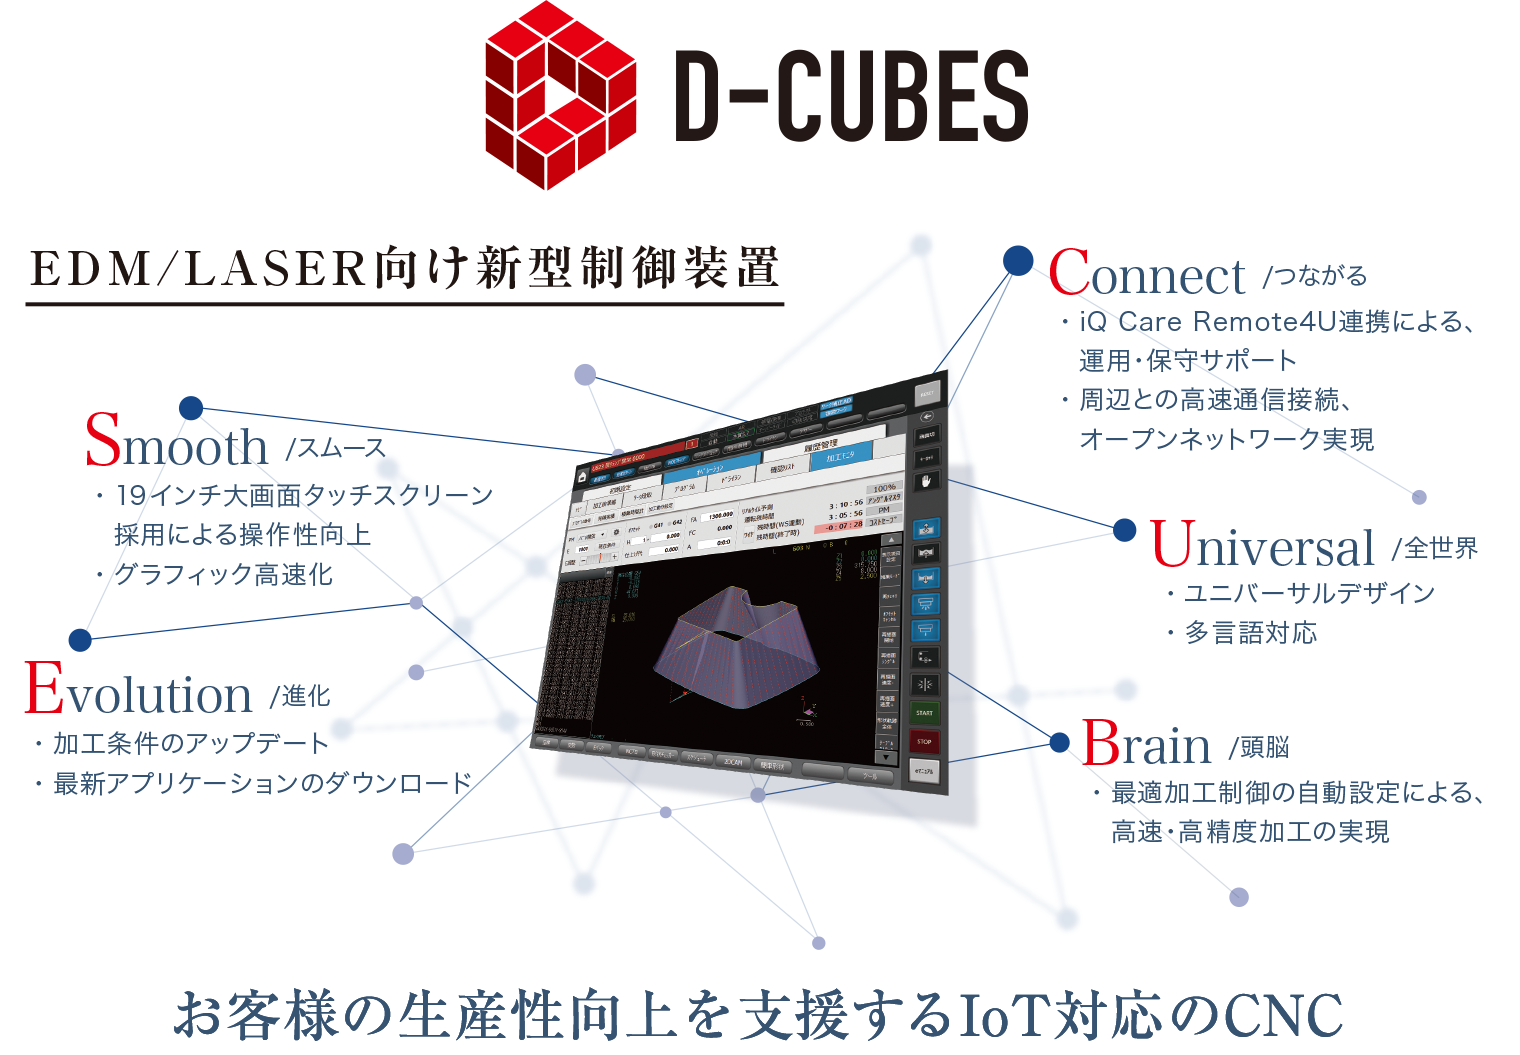 D-CUBES EDM／LASER向け新型制御装置 お客様の生産性向上を支援するIoT対応のCNC